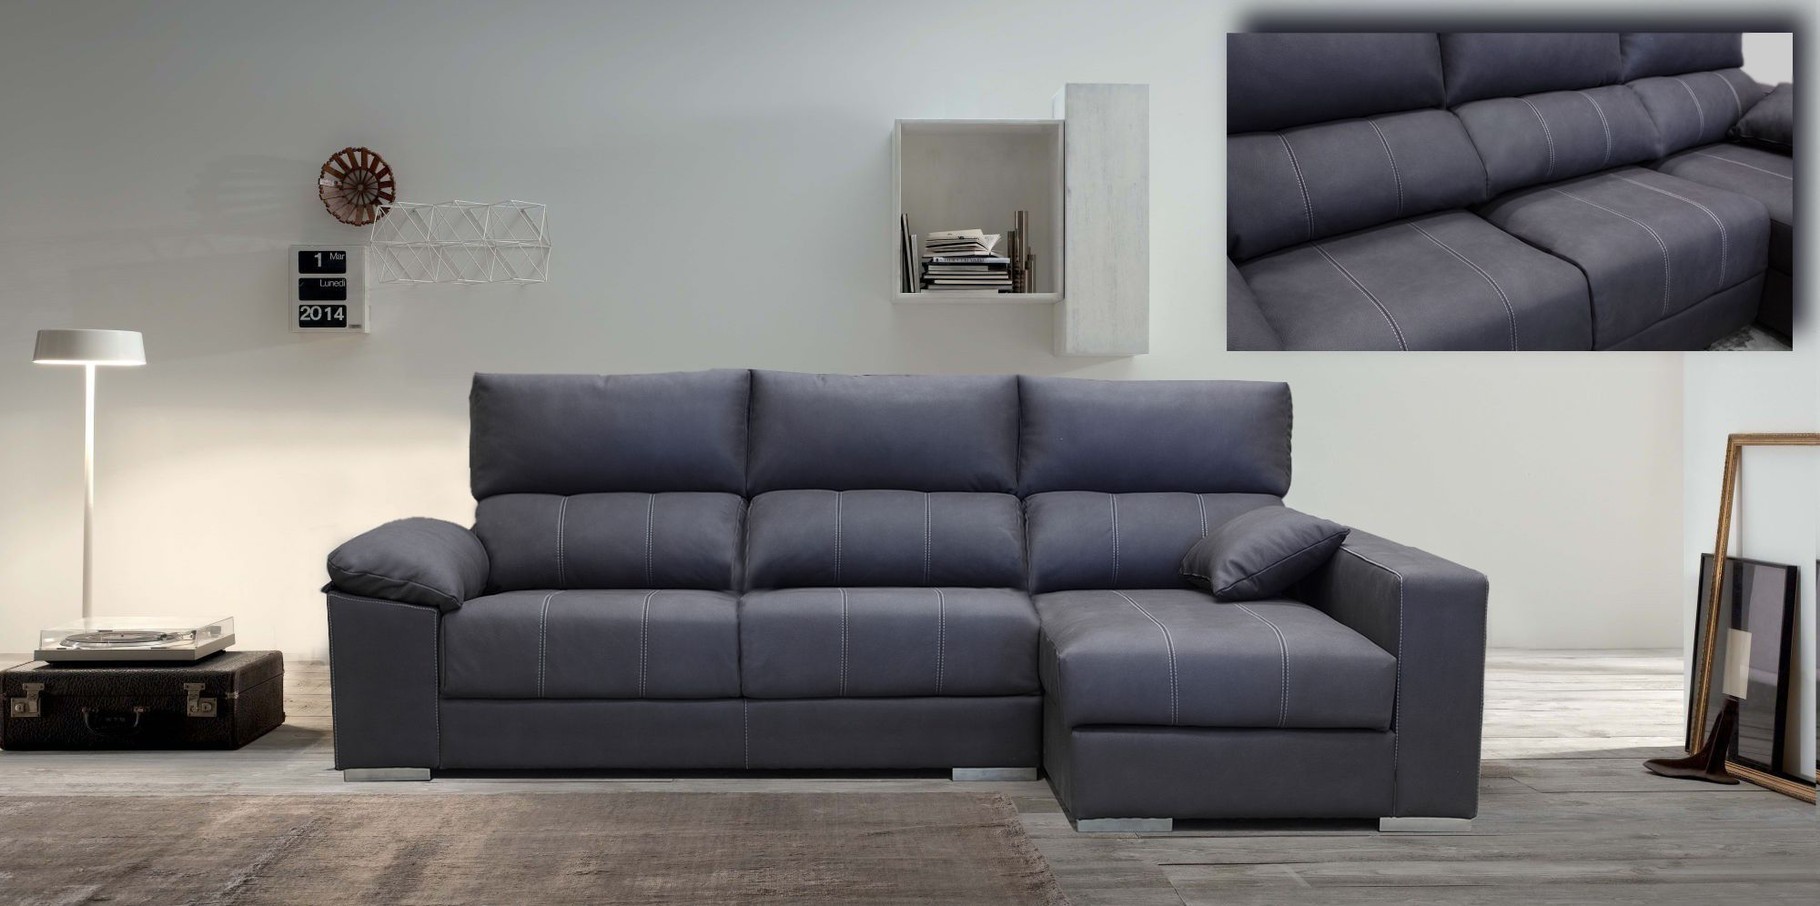 sofa cheslonge 285 cm dos puff extraible reclinable arcon en la ches solo 